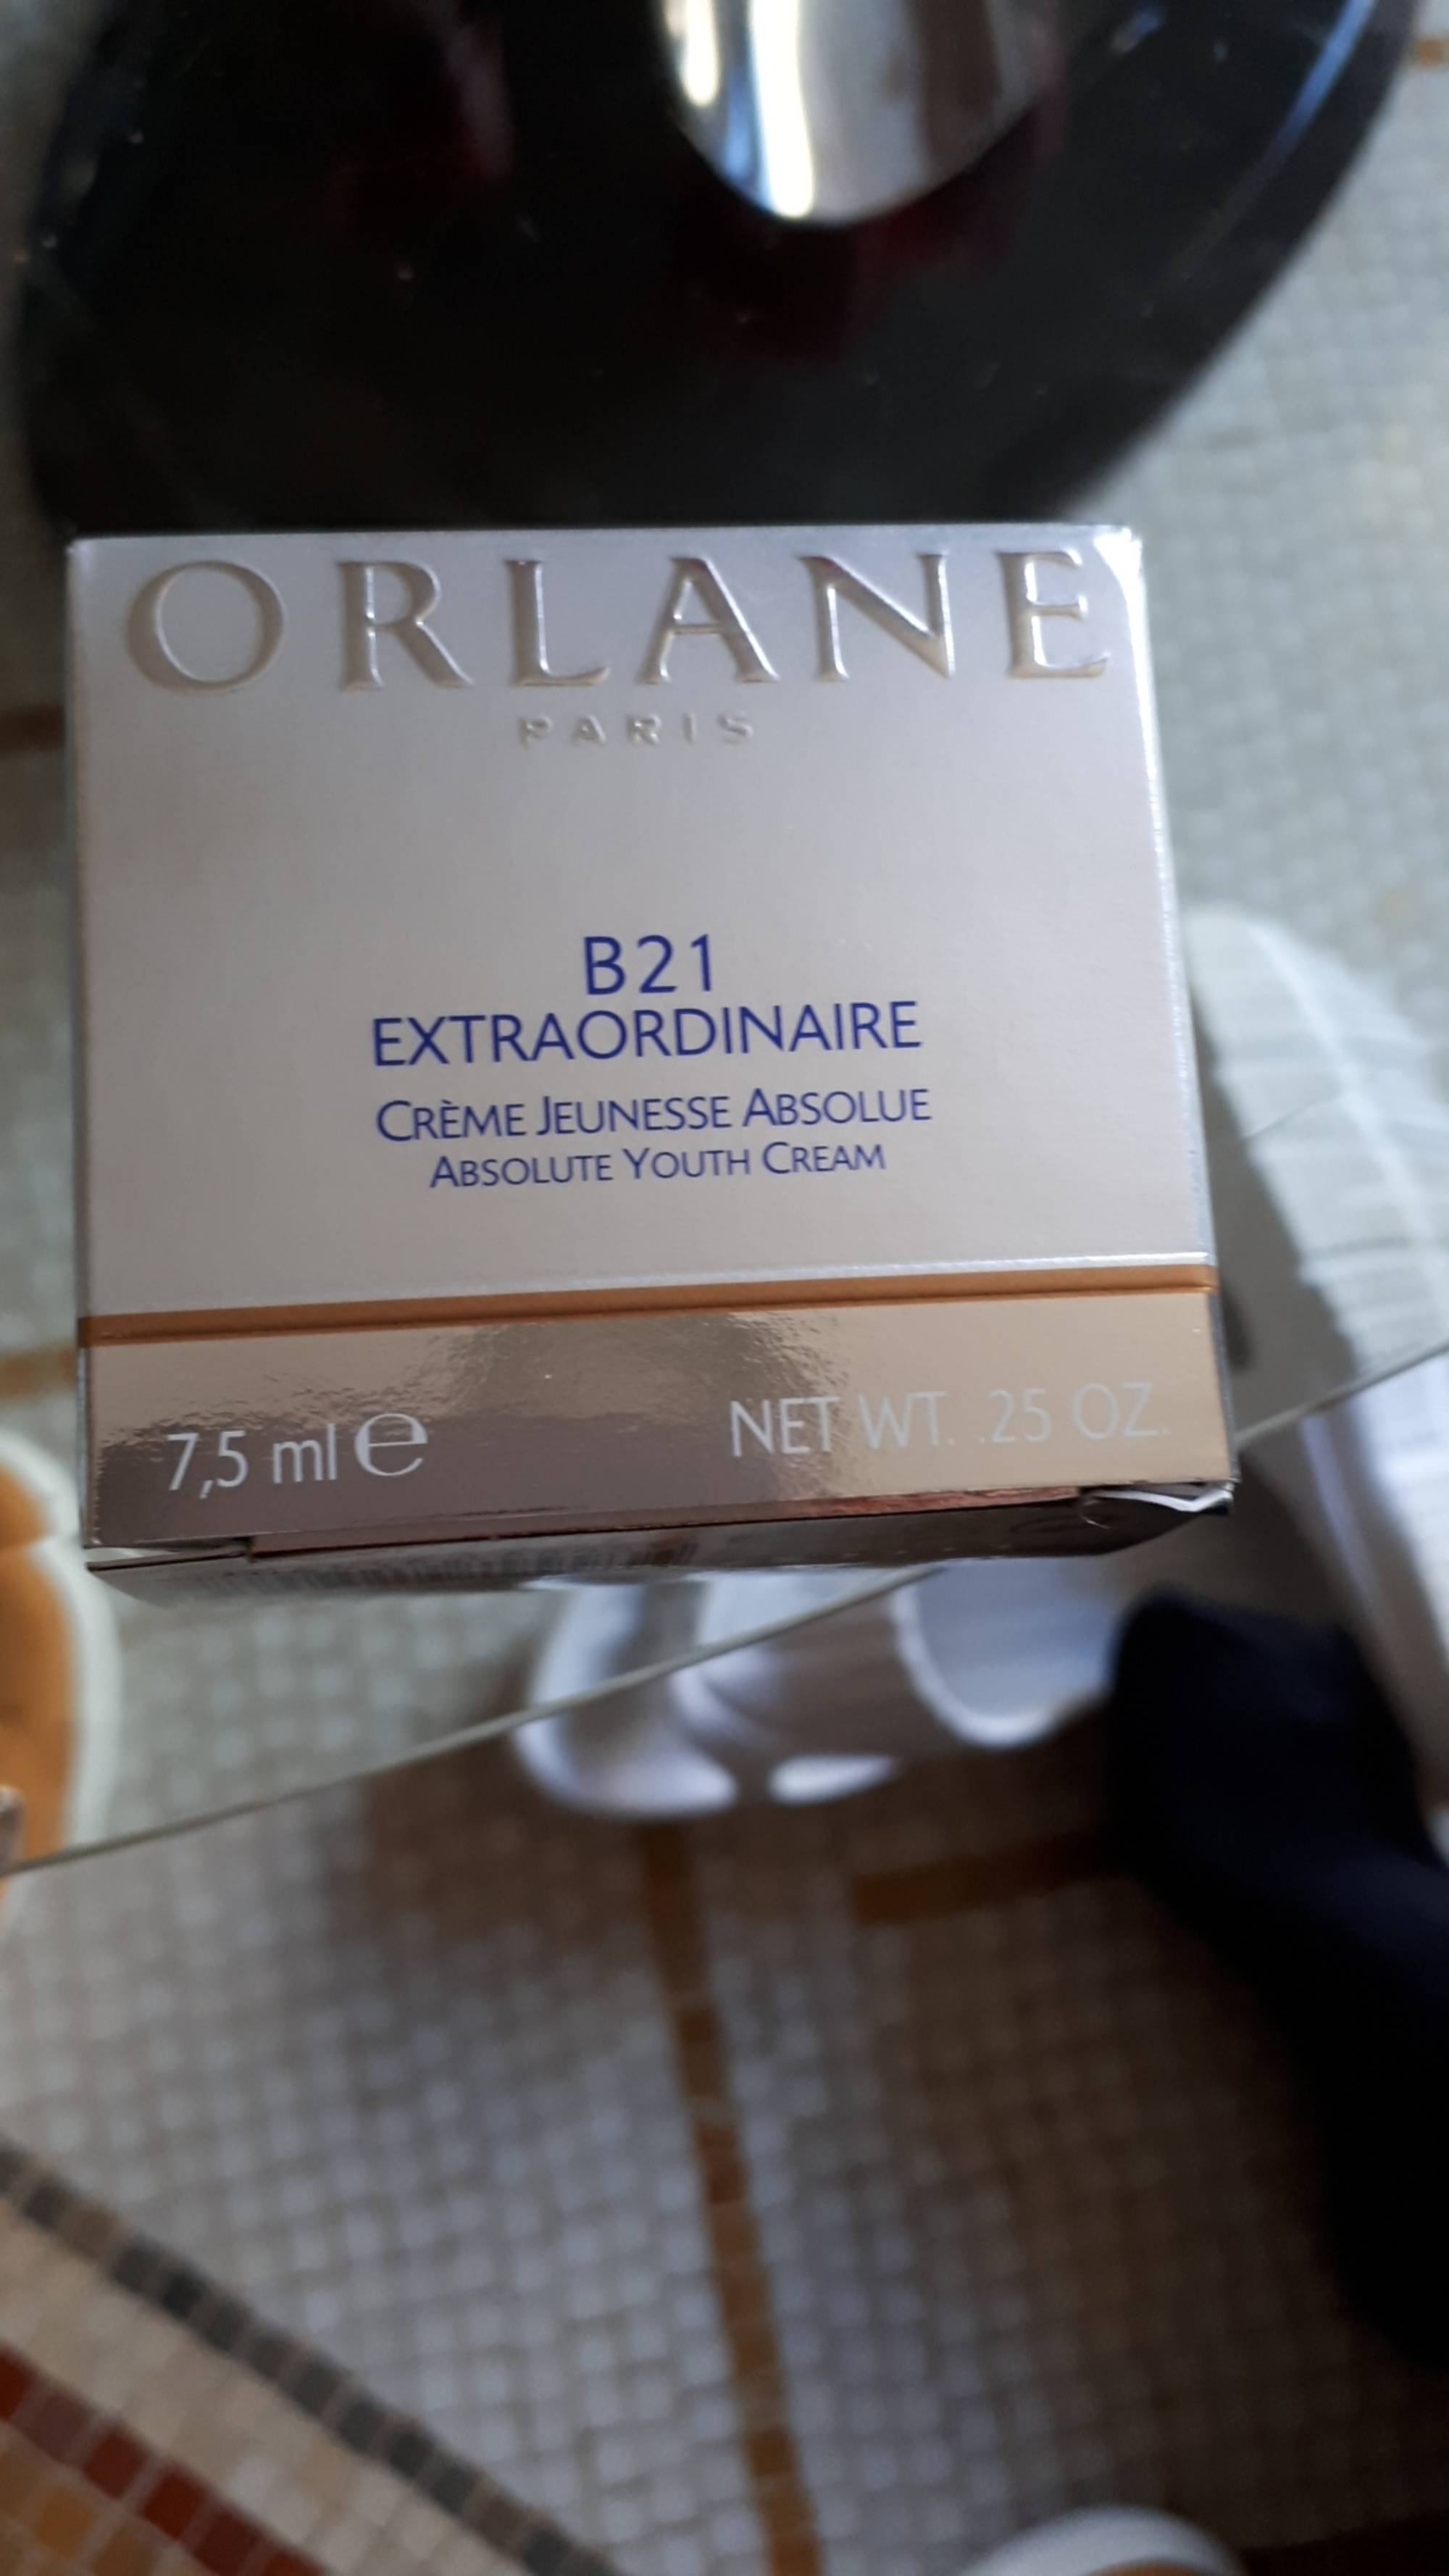 ORLANE - B21 extraordinaire - Crème jeunesse absolue